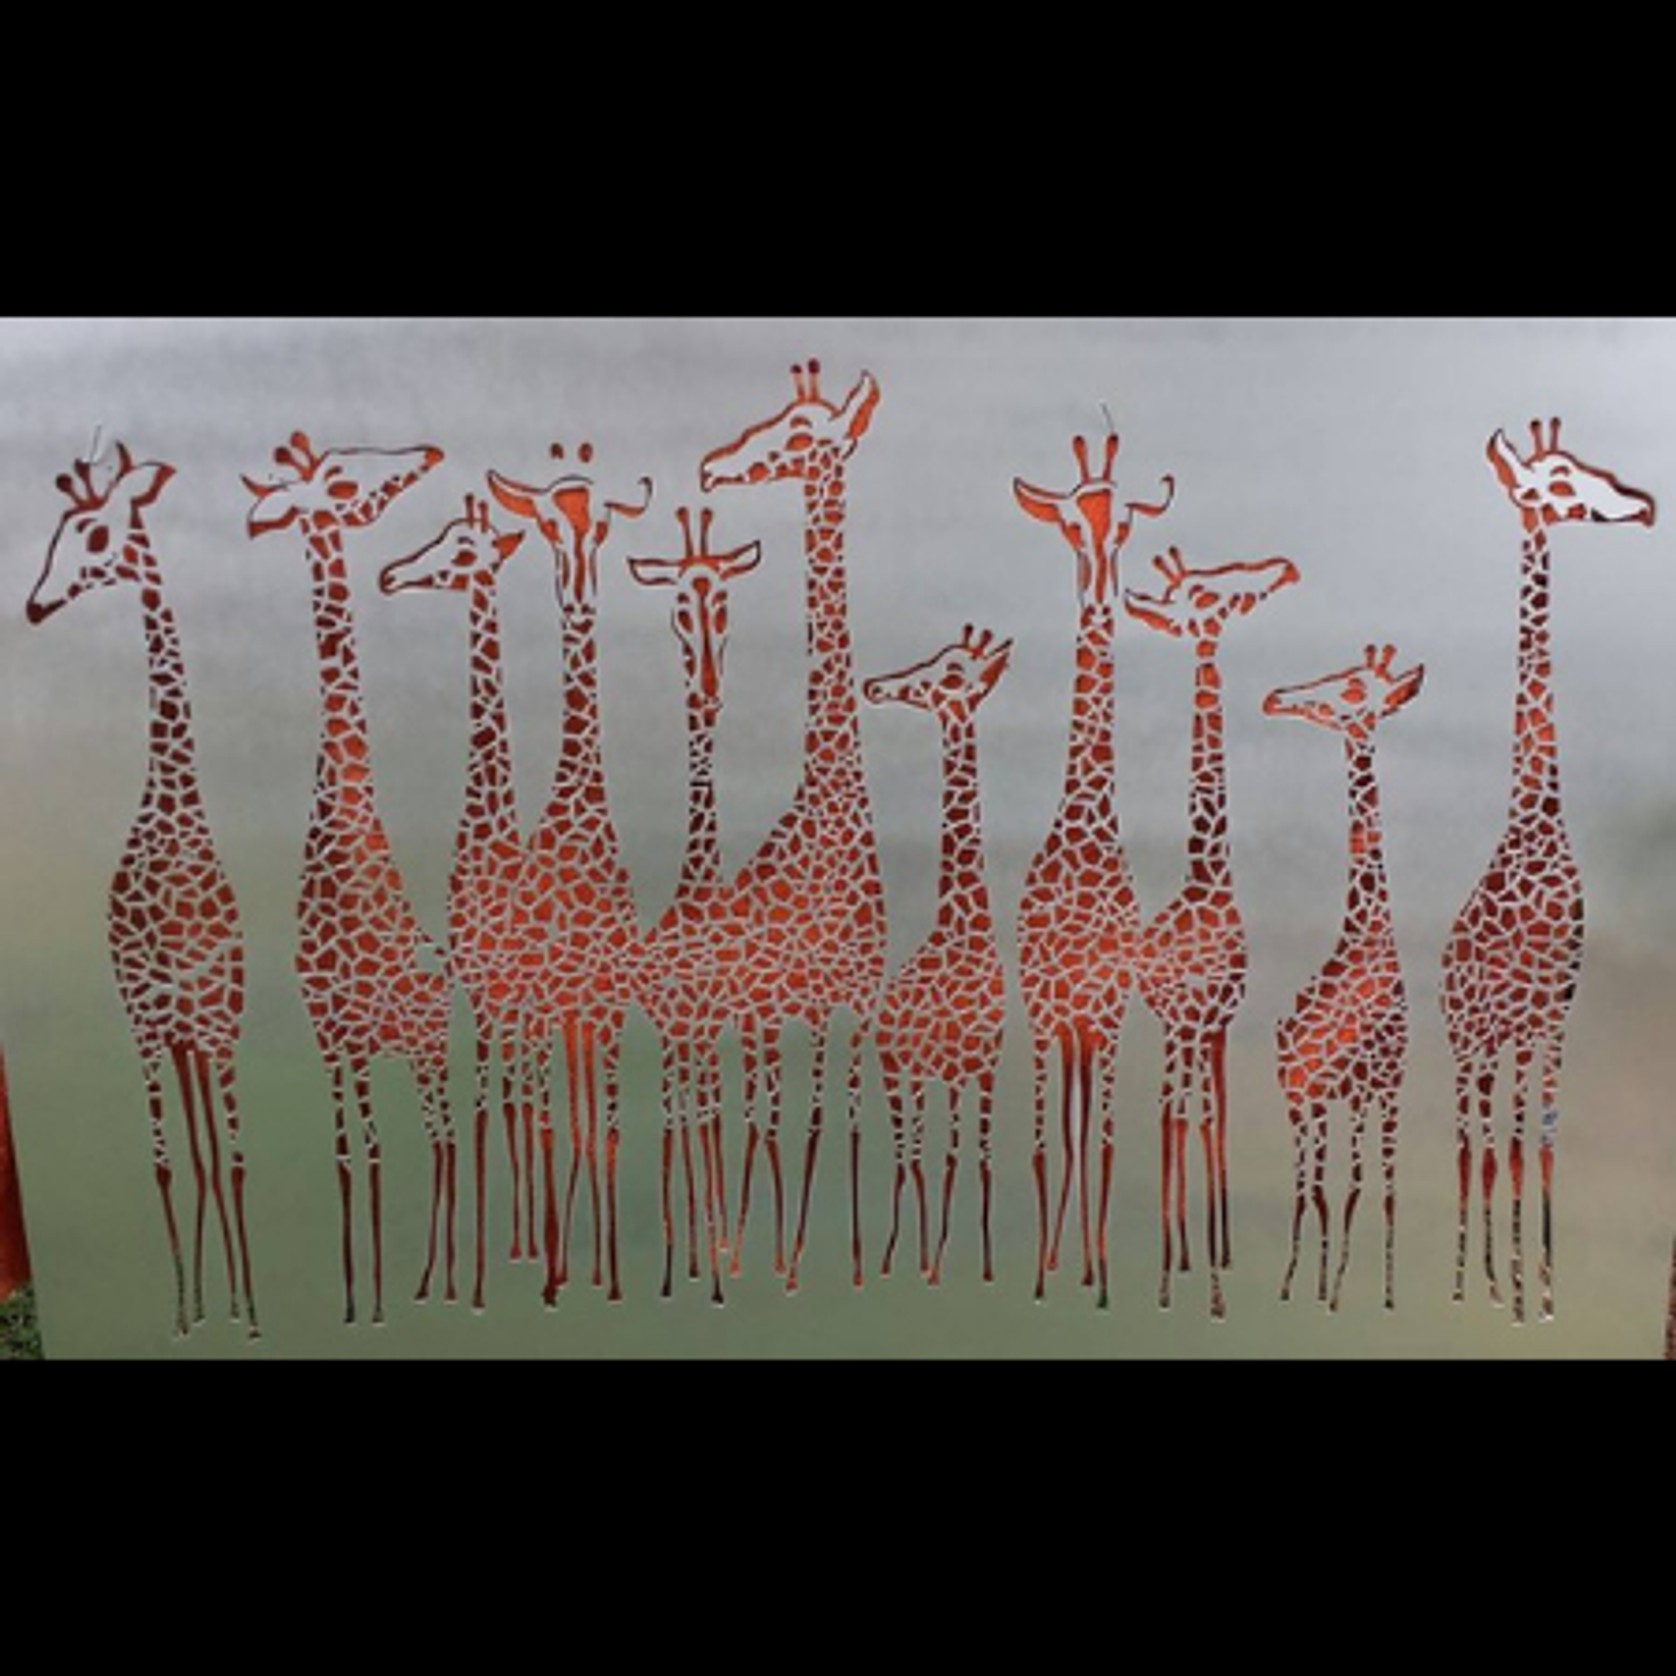 Giraffe Tower Metal Wall Art Panel gallery detail image